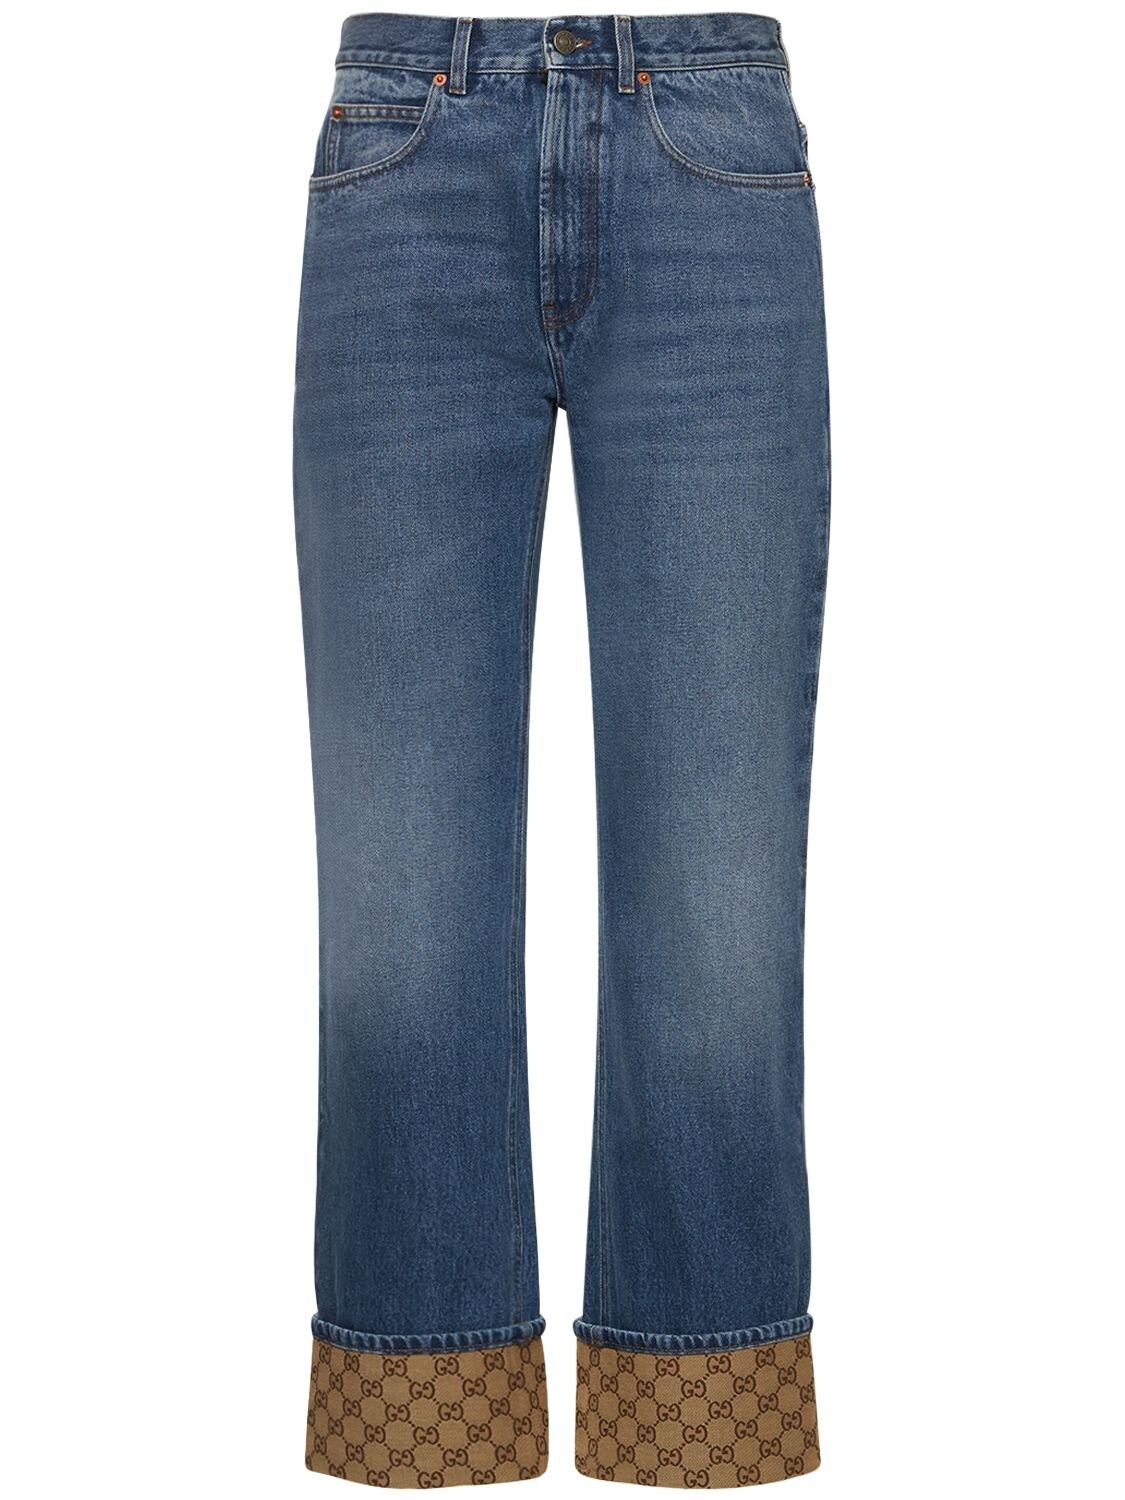 GUCCI Jeans Men, Denim trousers with GG cuff Blue